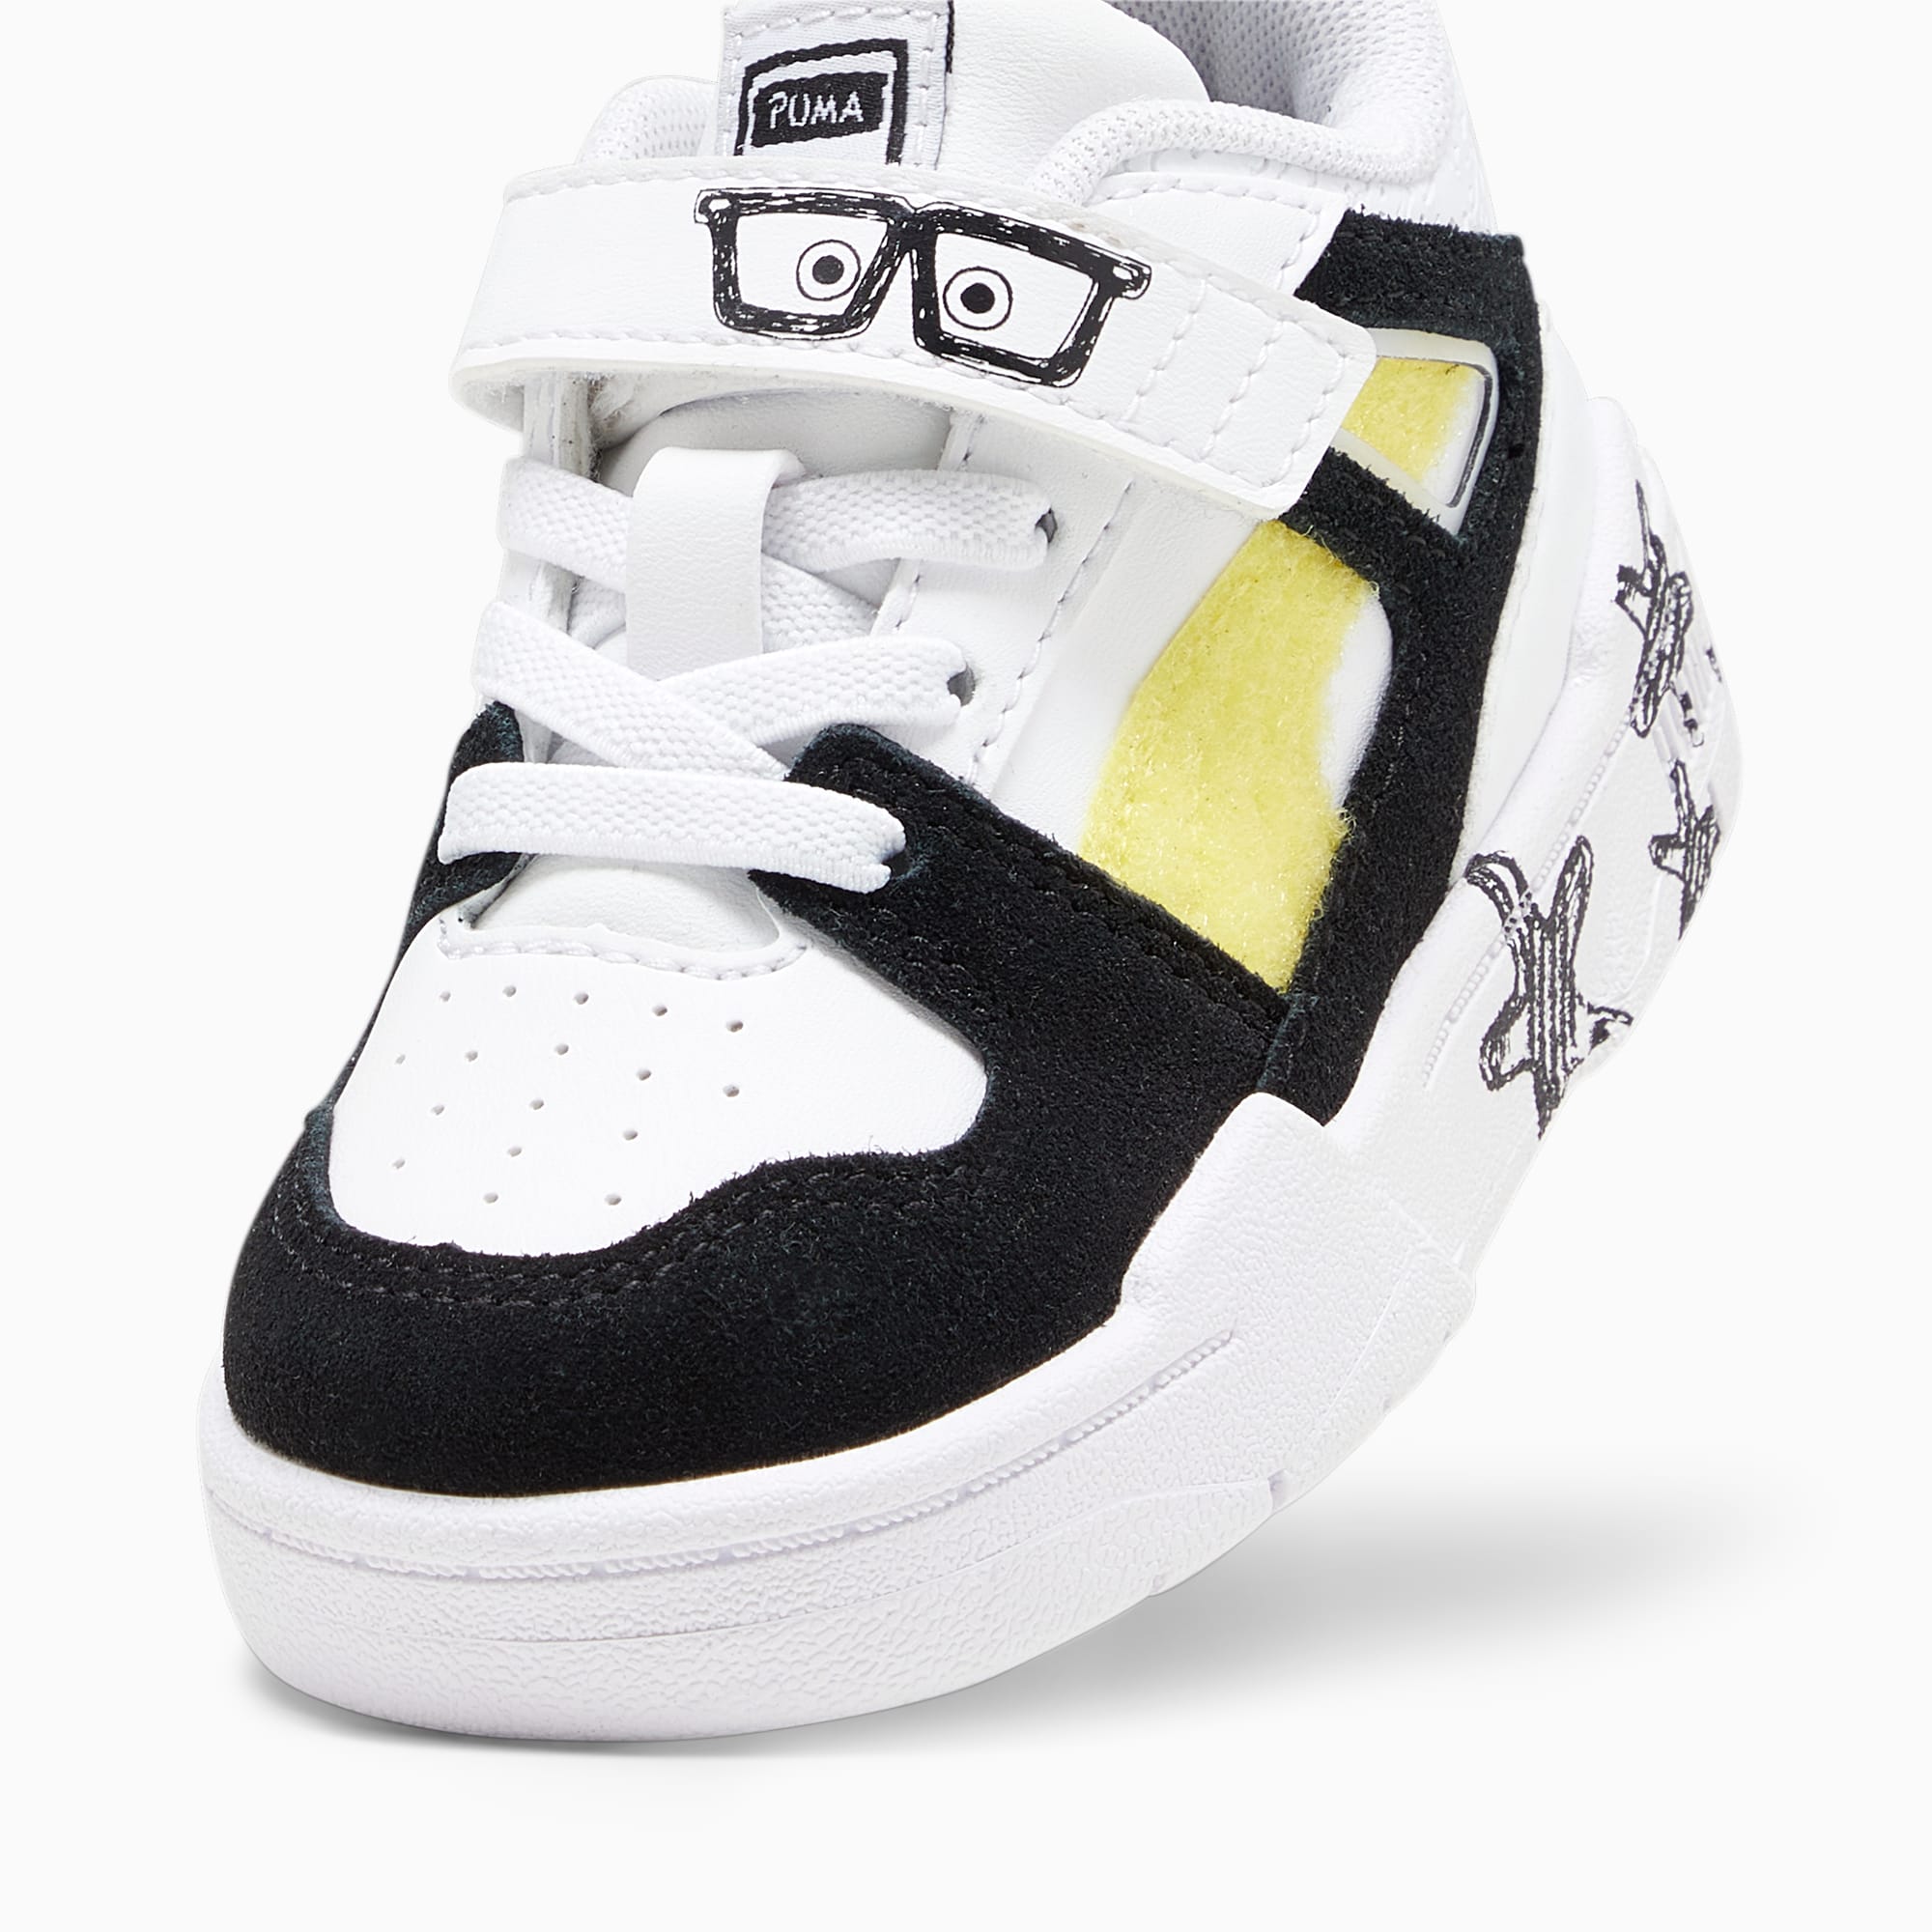 PUMA X Spongebob Squarepants Slipstream Toddlers' Sneakers, White/Black, Size 19, Shoes